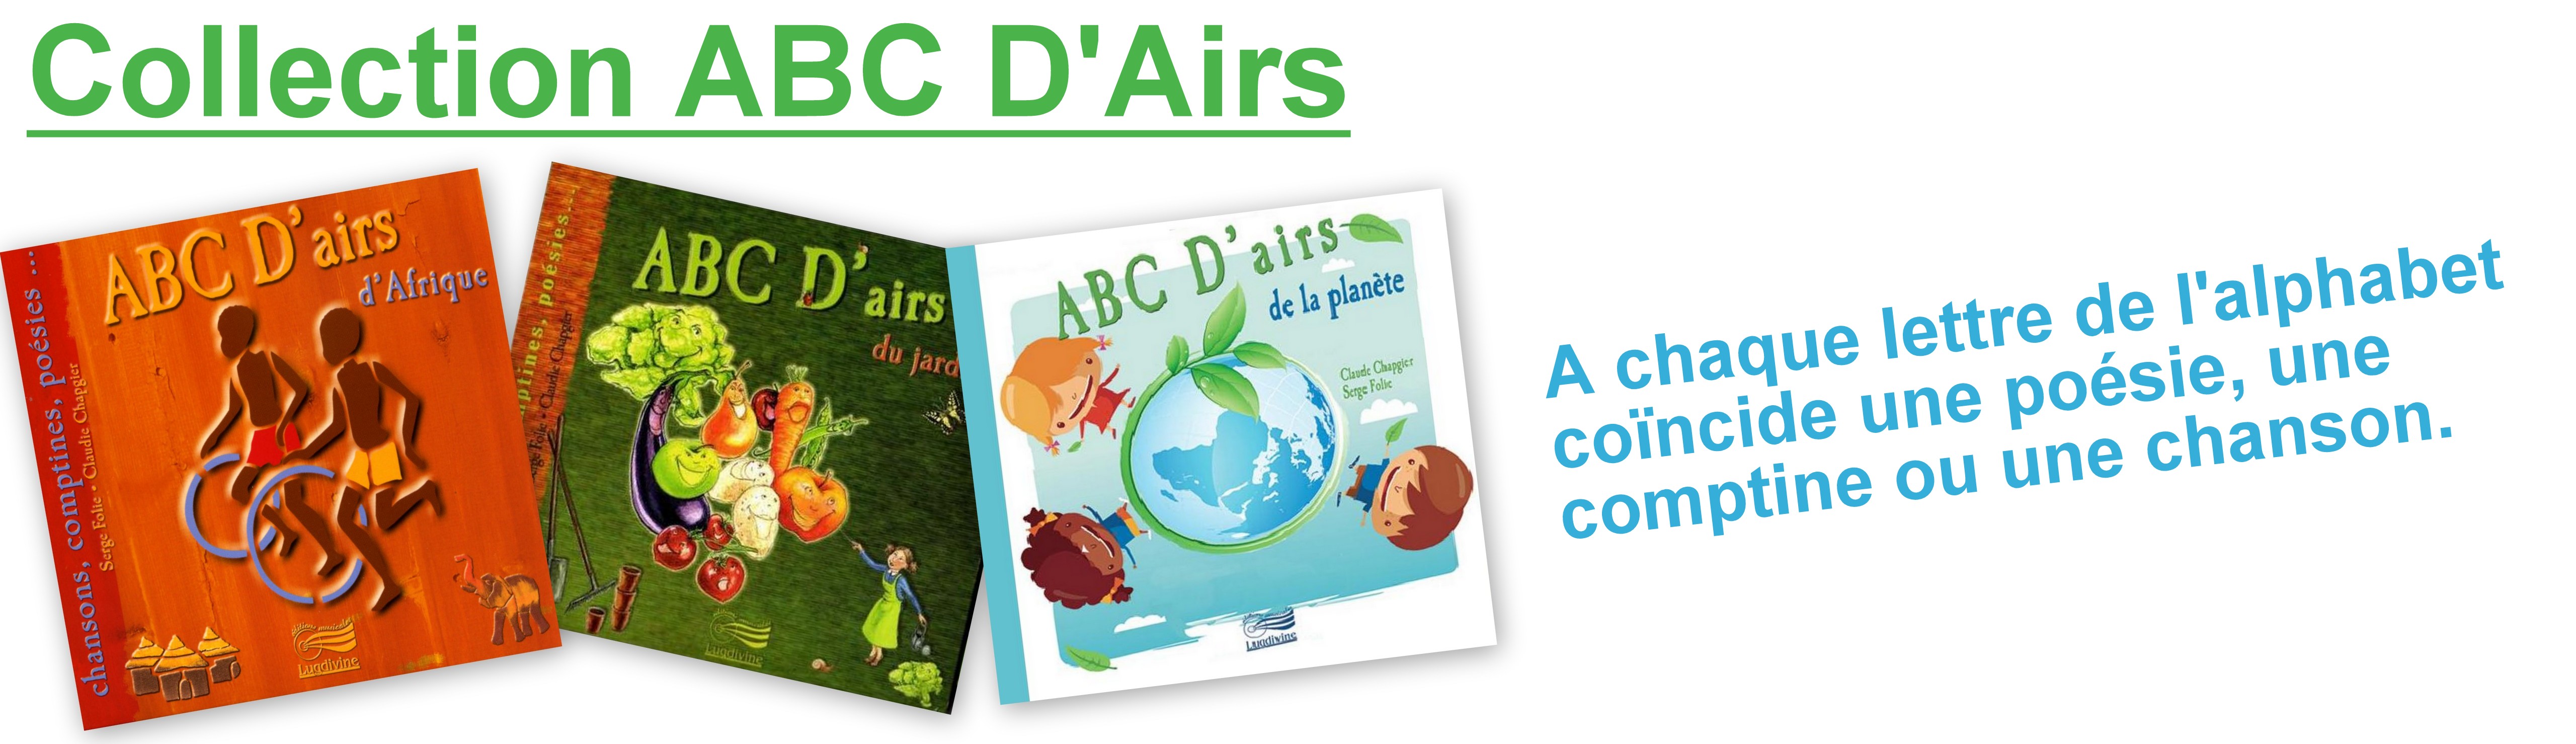 Librairie : Livre-CD, CD, DVD: ABC D'airs du jardin - Livret